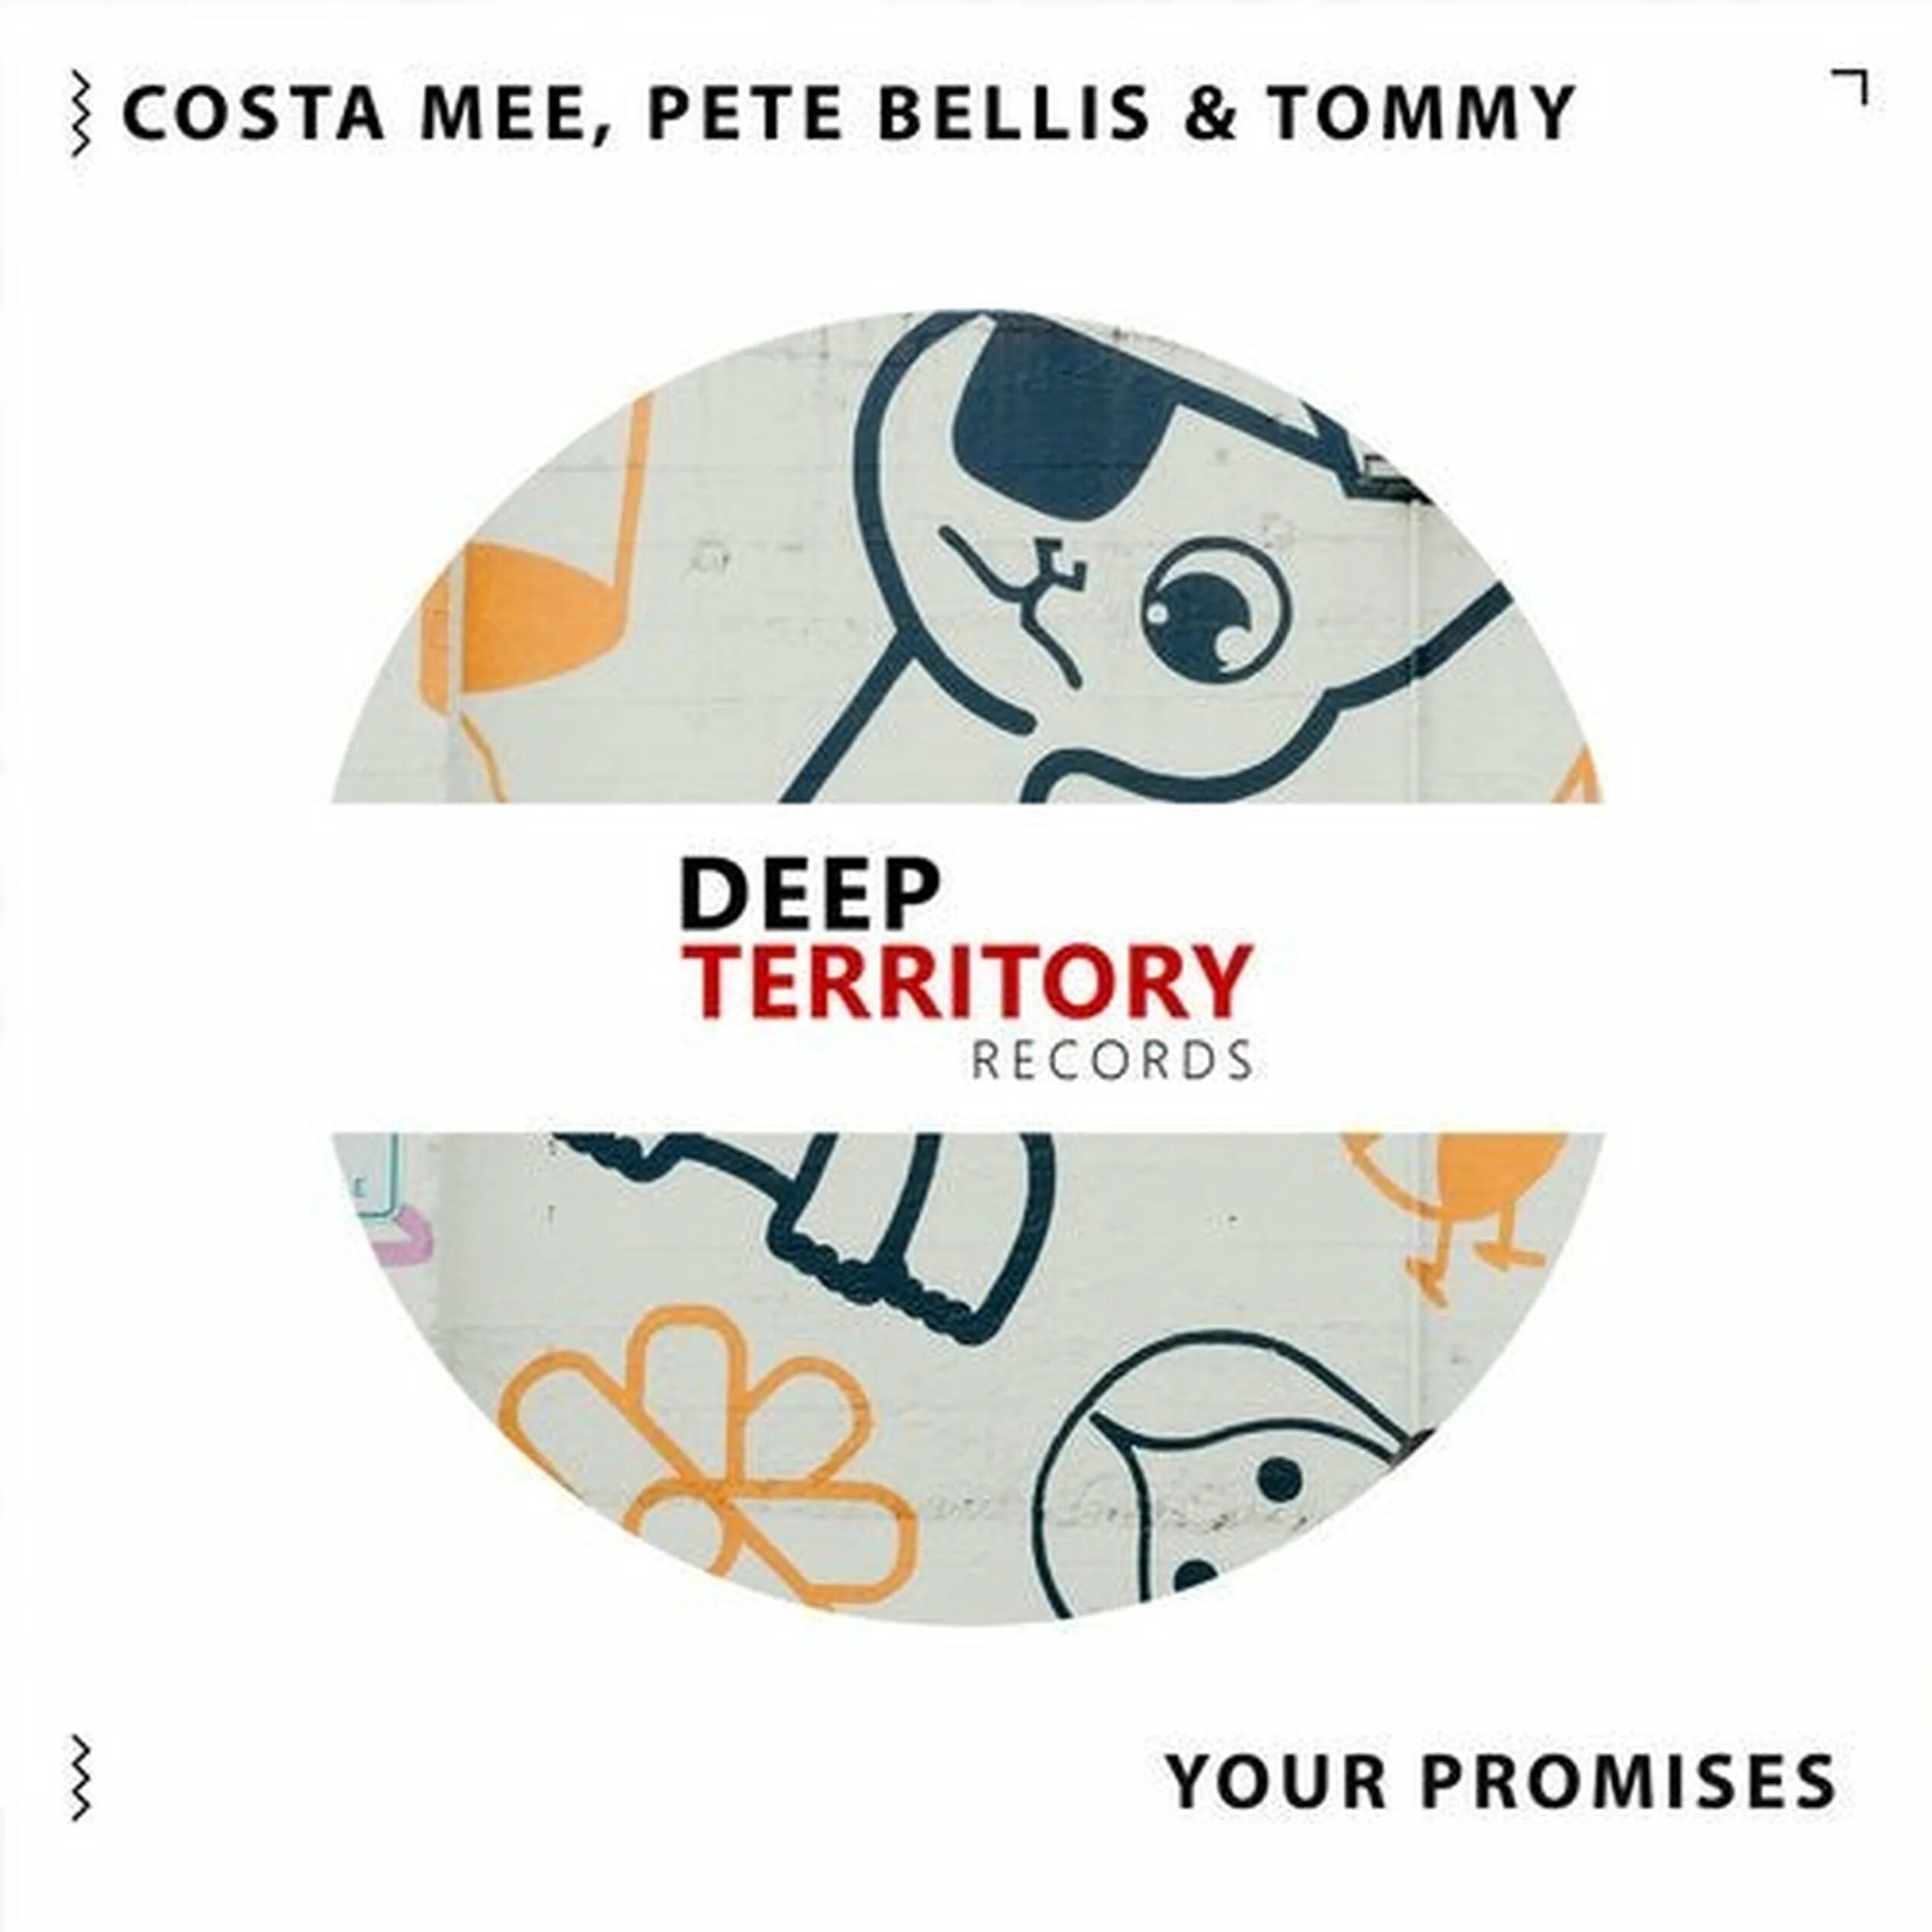 Costa mee & Pete Bellis & Tommy. Costa mee & Pete Bellis & Tommy - empty Promises. Costa mee Pete Bellis Tommy looking for you. Pete Bellis Deep Territory. Costa me pete bellis tommy